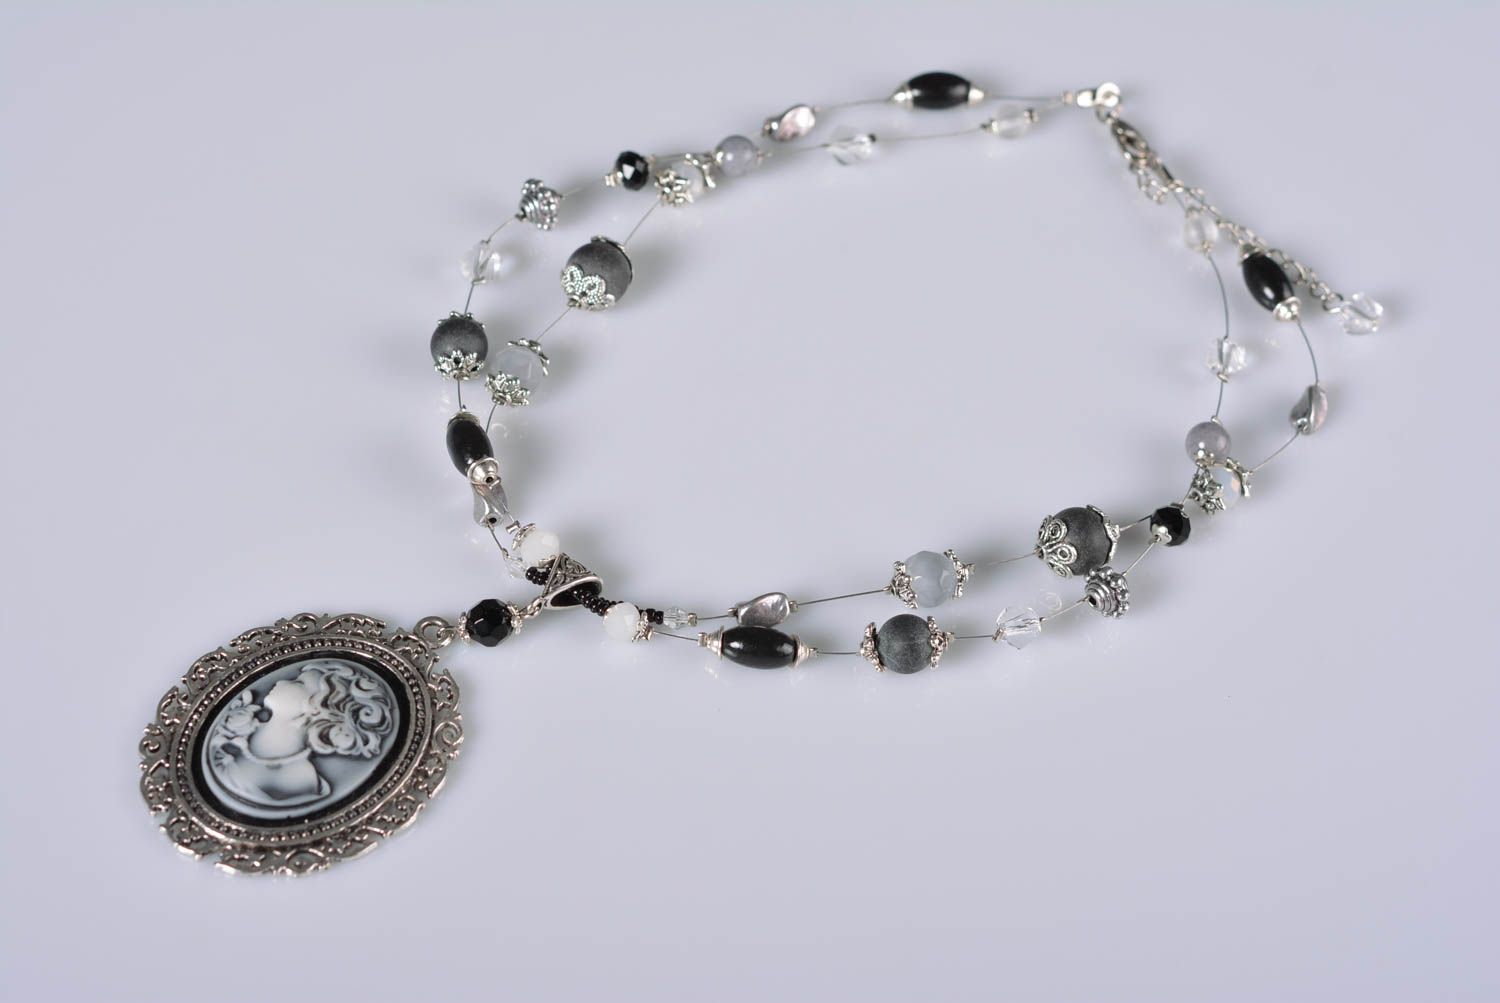 Beautiful handmade beaded necklace cameo pendant bead weaving cool jewelry photo 1